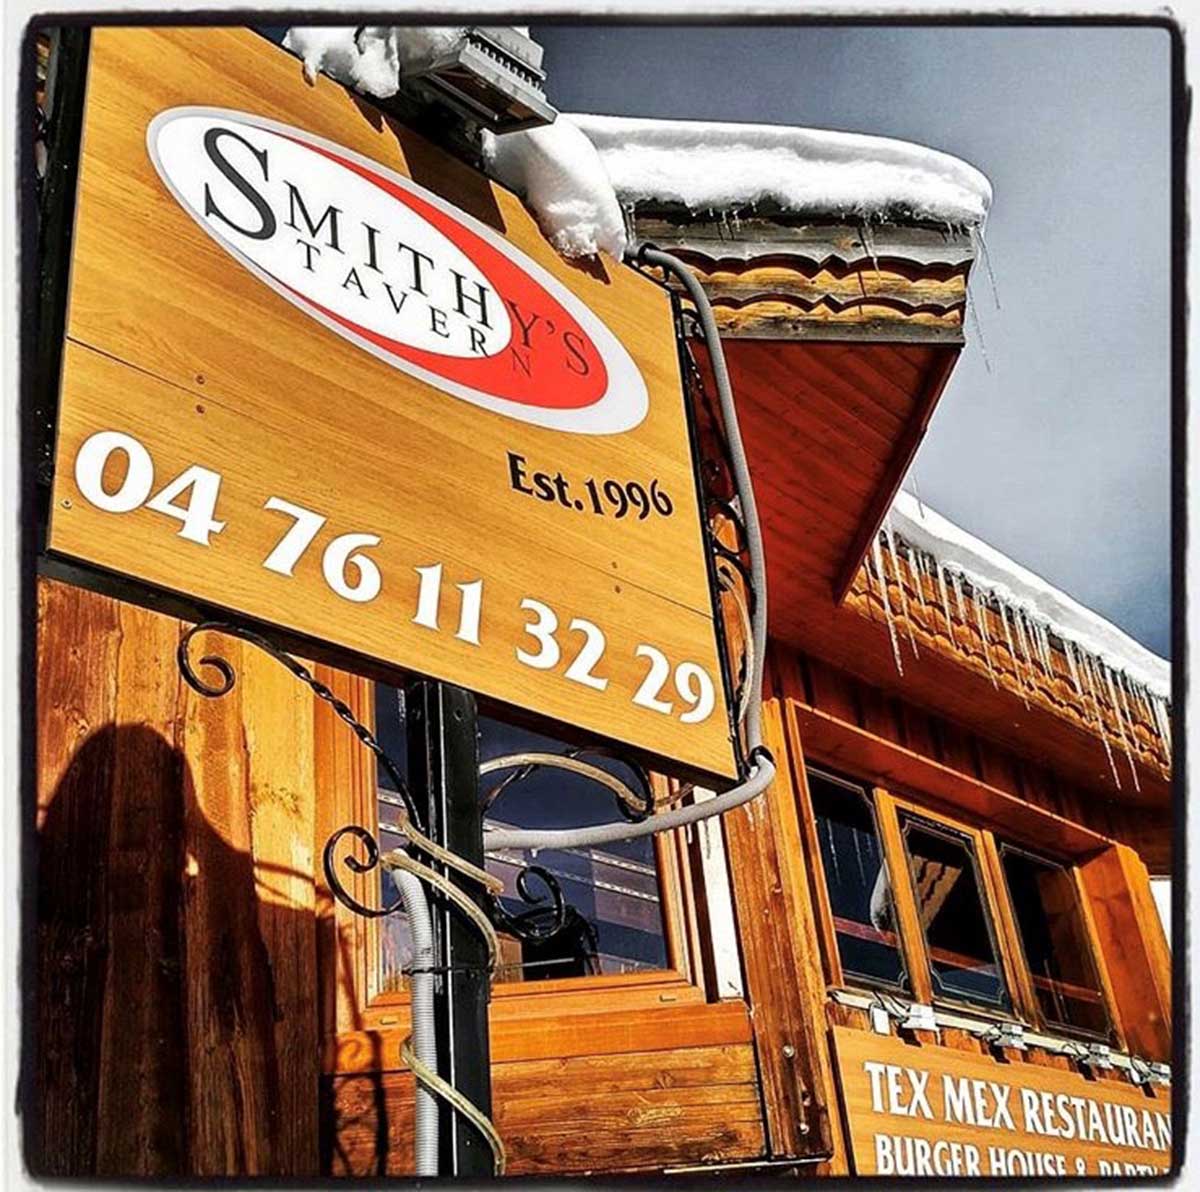 Smithy's Tavern